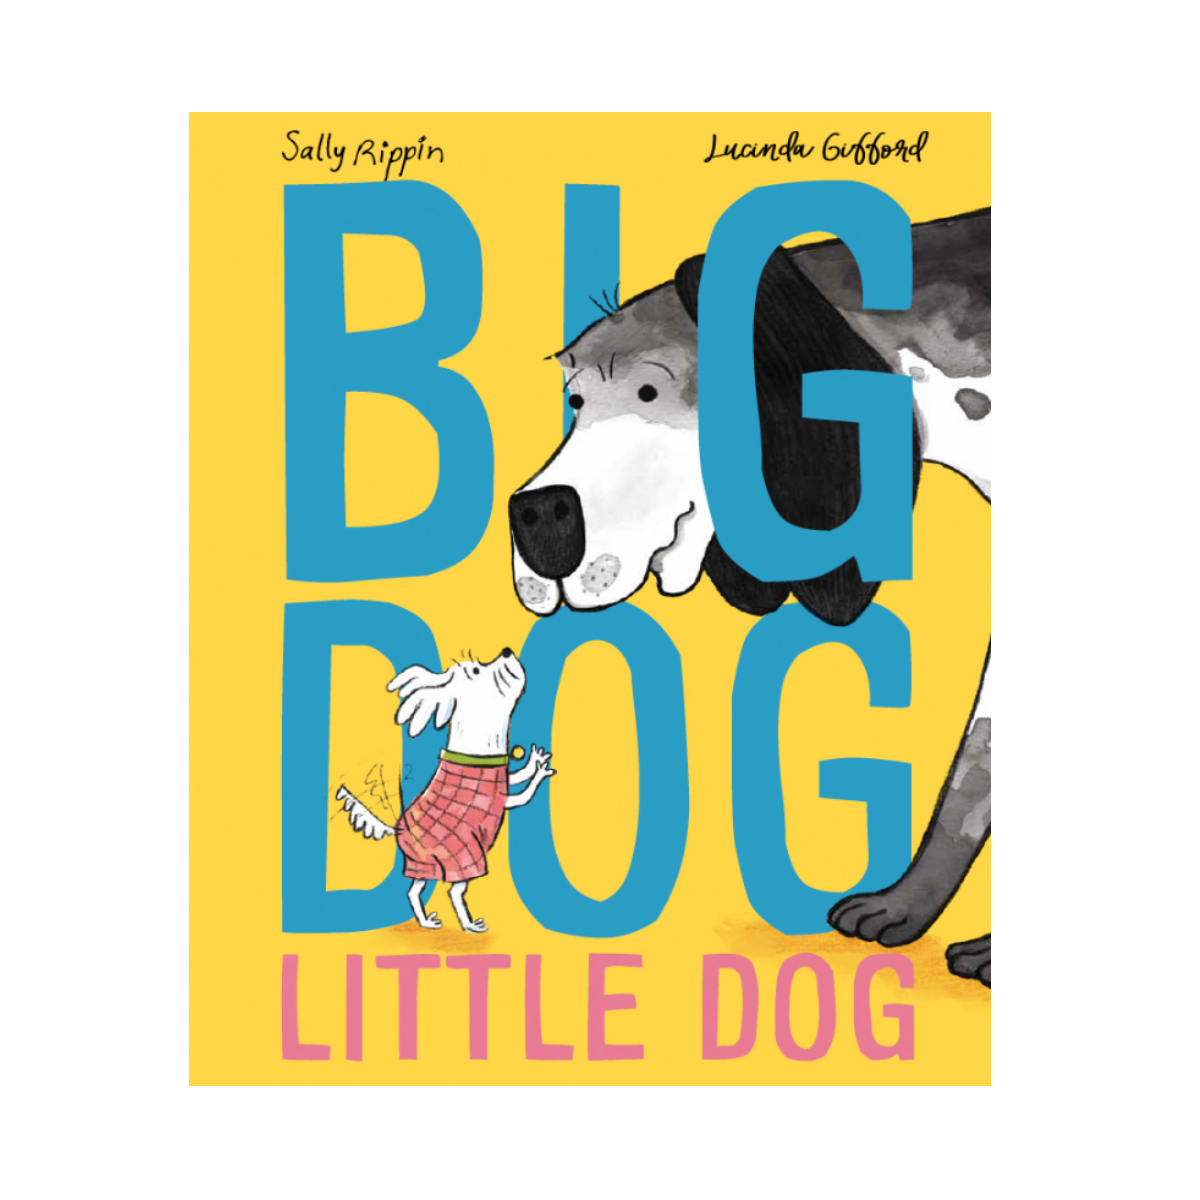 Big Dog Little Dog by Sally Rippin (3+)